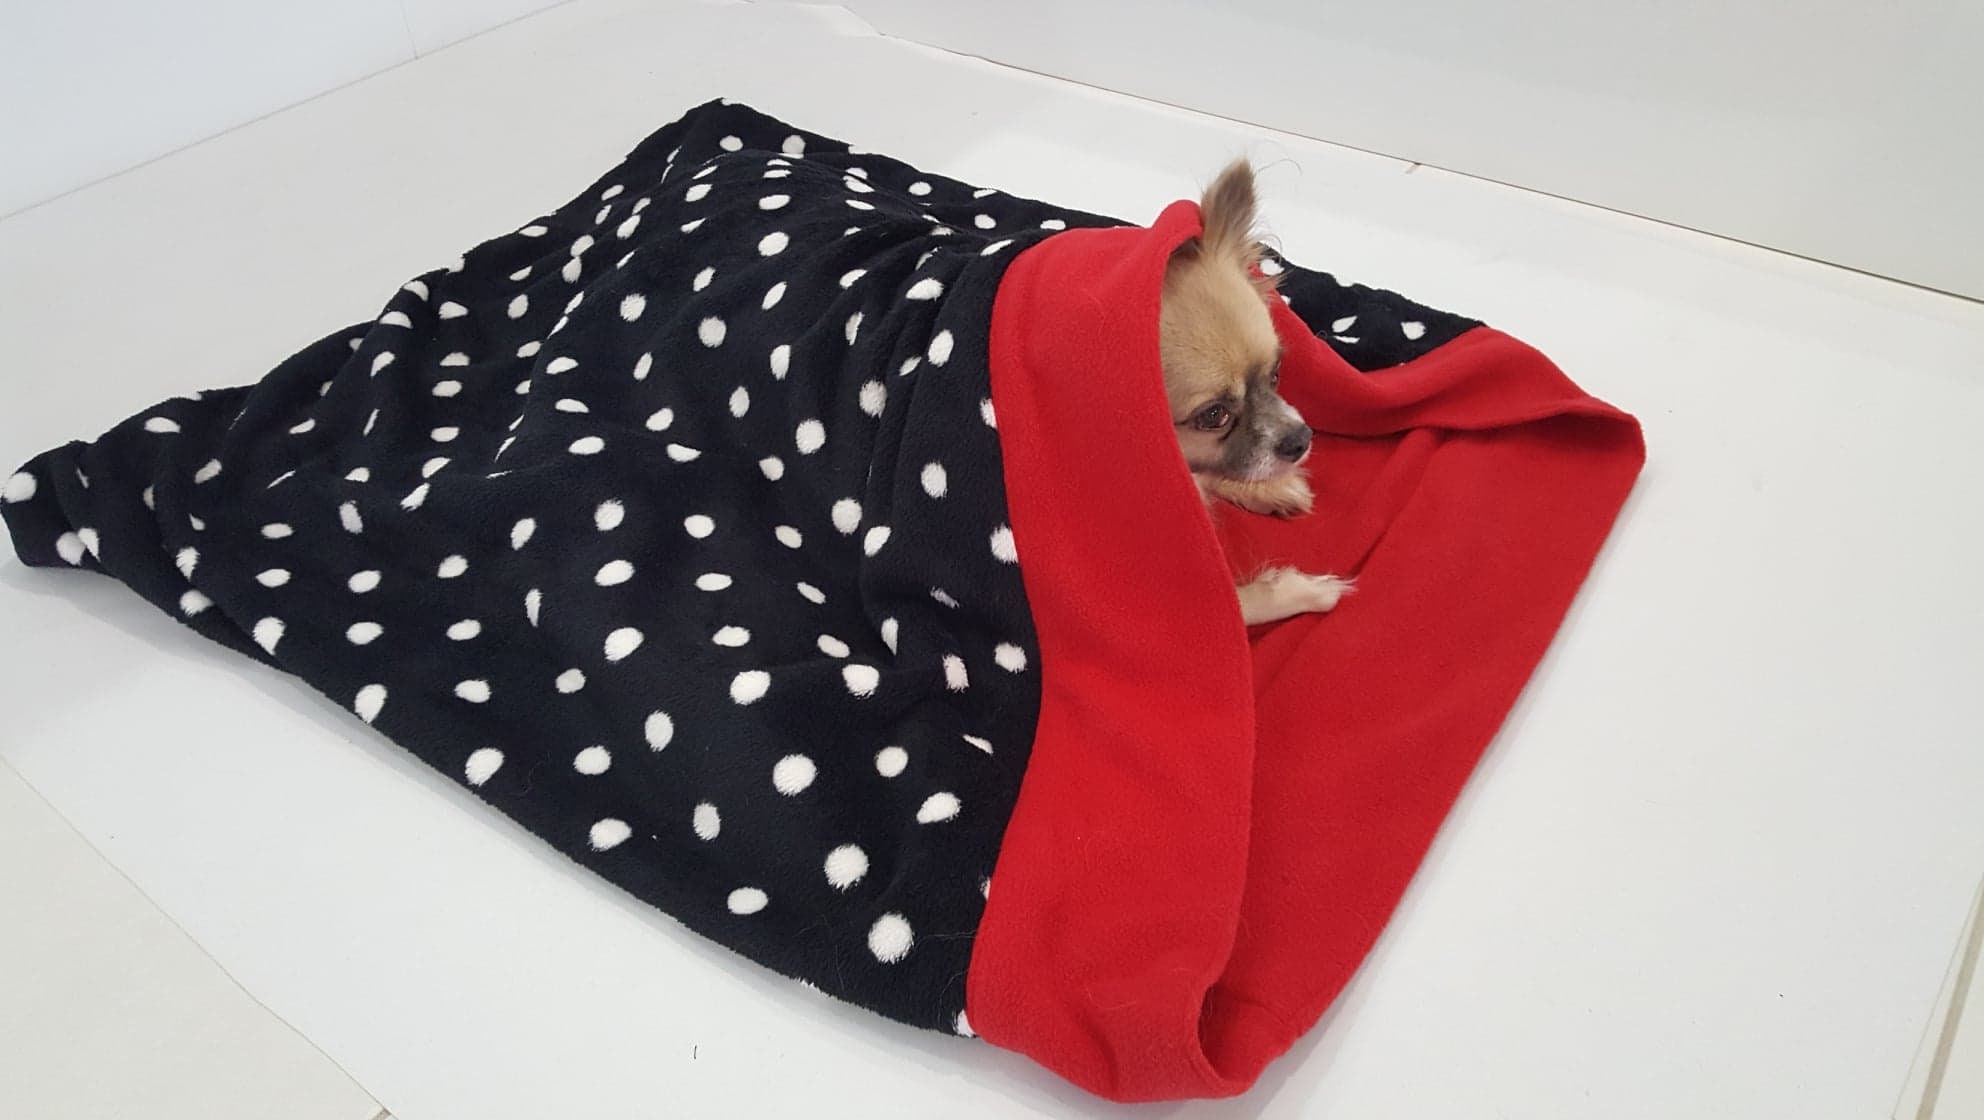 Dachshund bed, Dog bed, Snuggle bed, Italian greyhound.